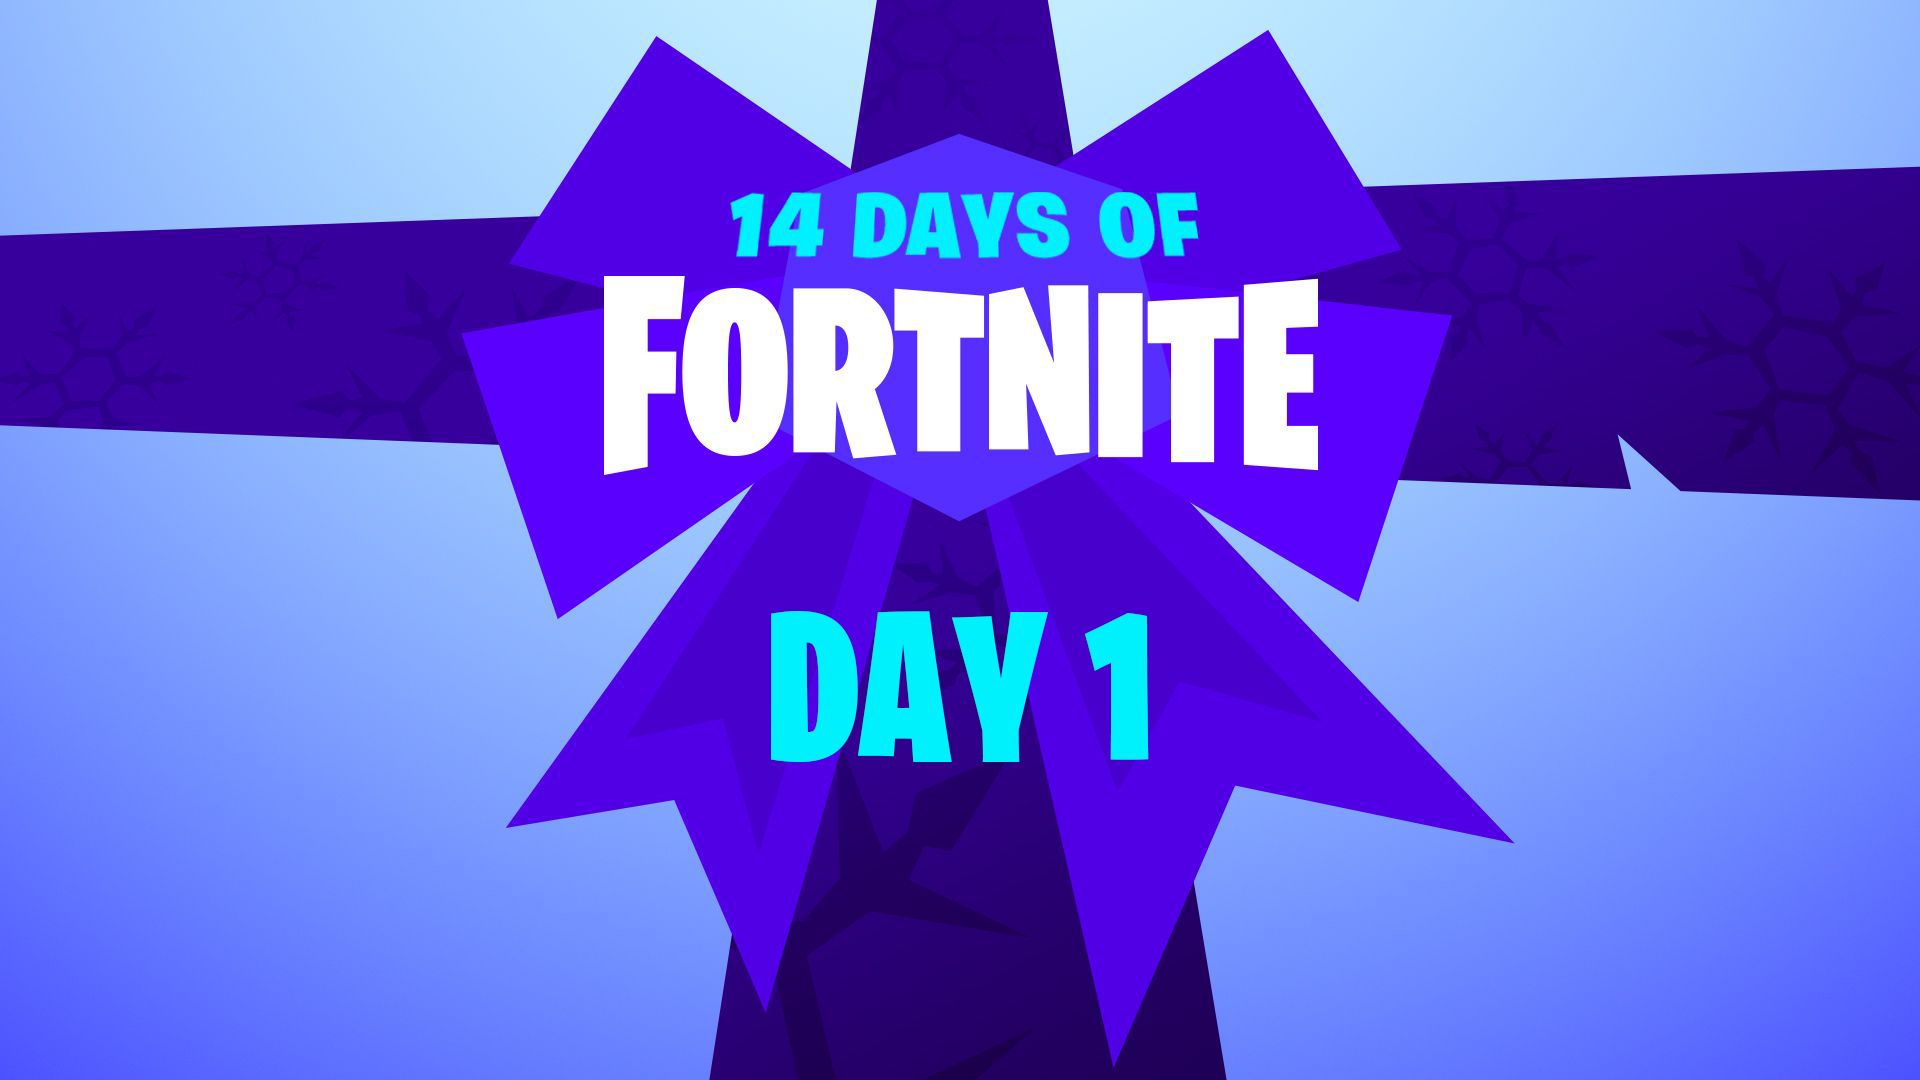 14 Days of Fortnite - Day 1 challenge & reward